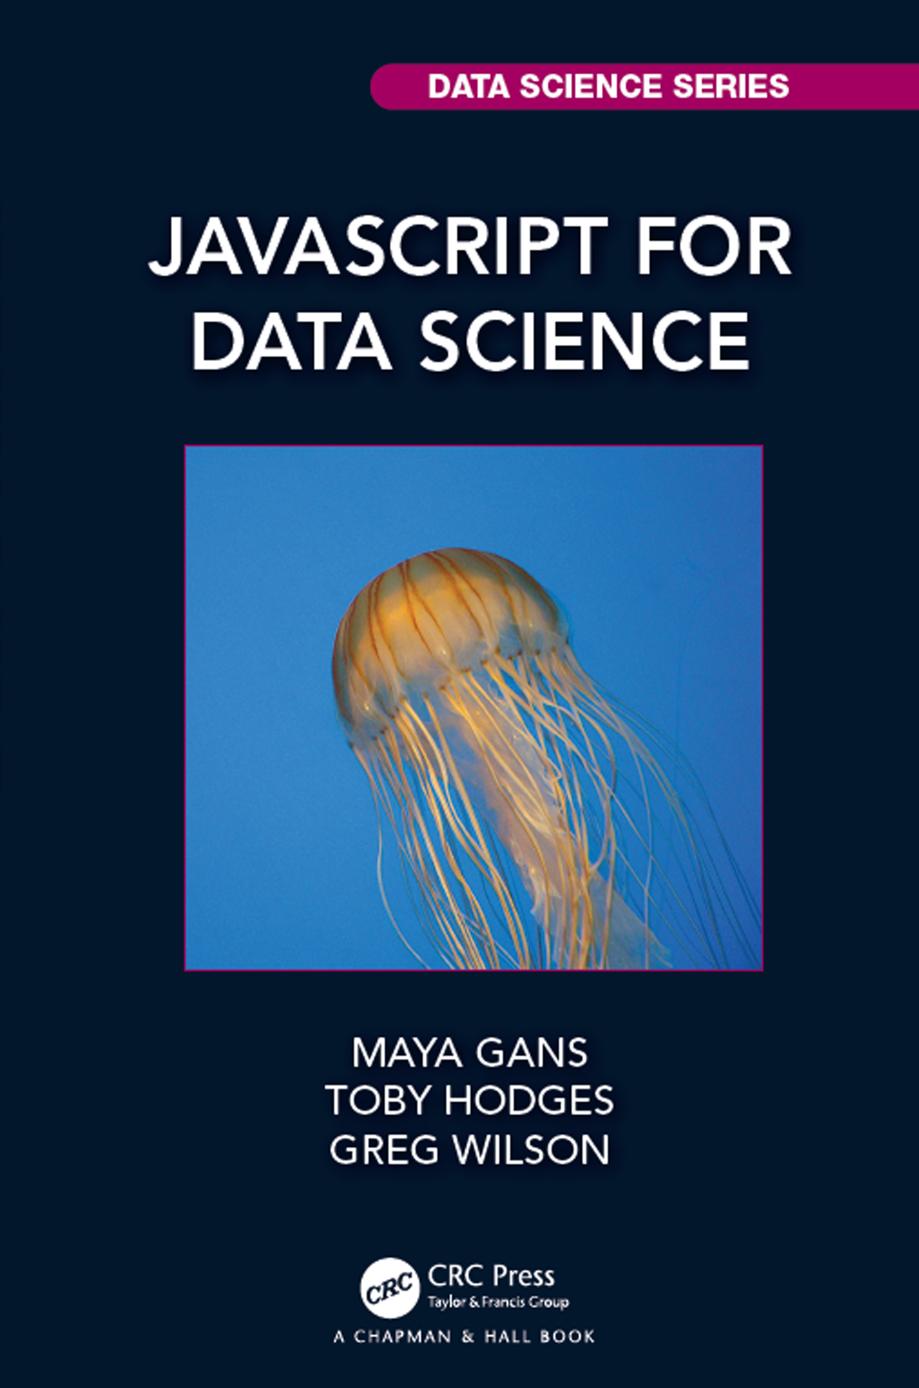 JavaScript for Data Science by Maya Gans & Toby Hodges & Greg Wilson